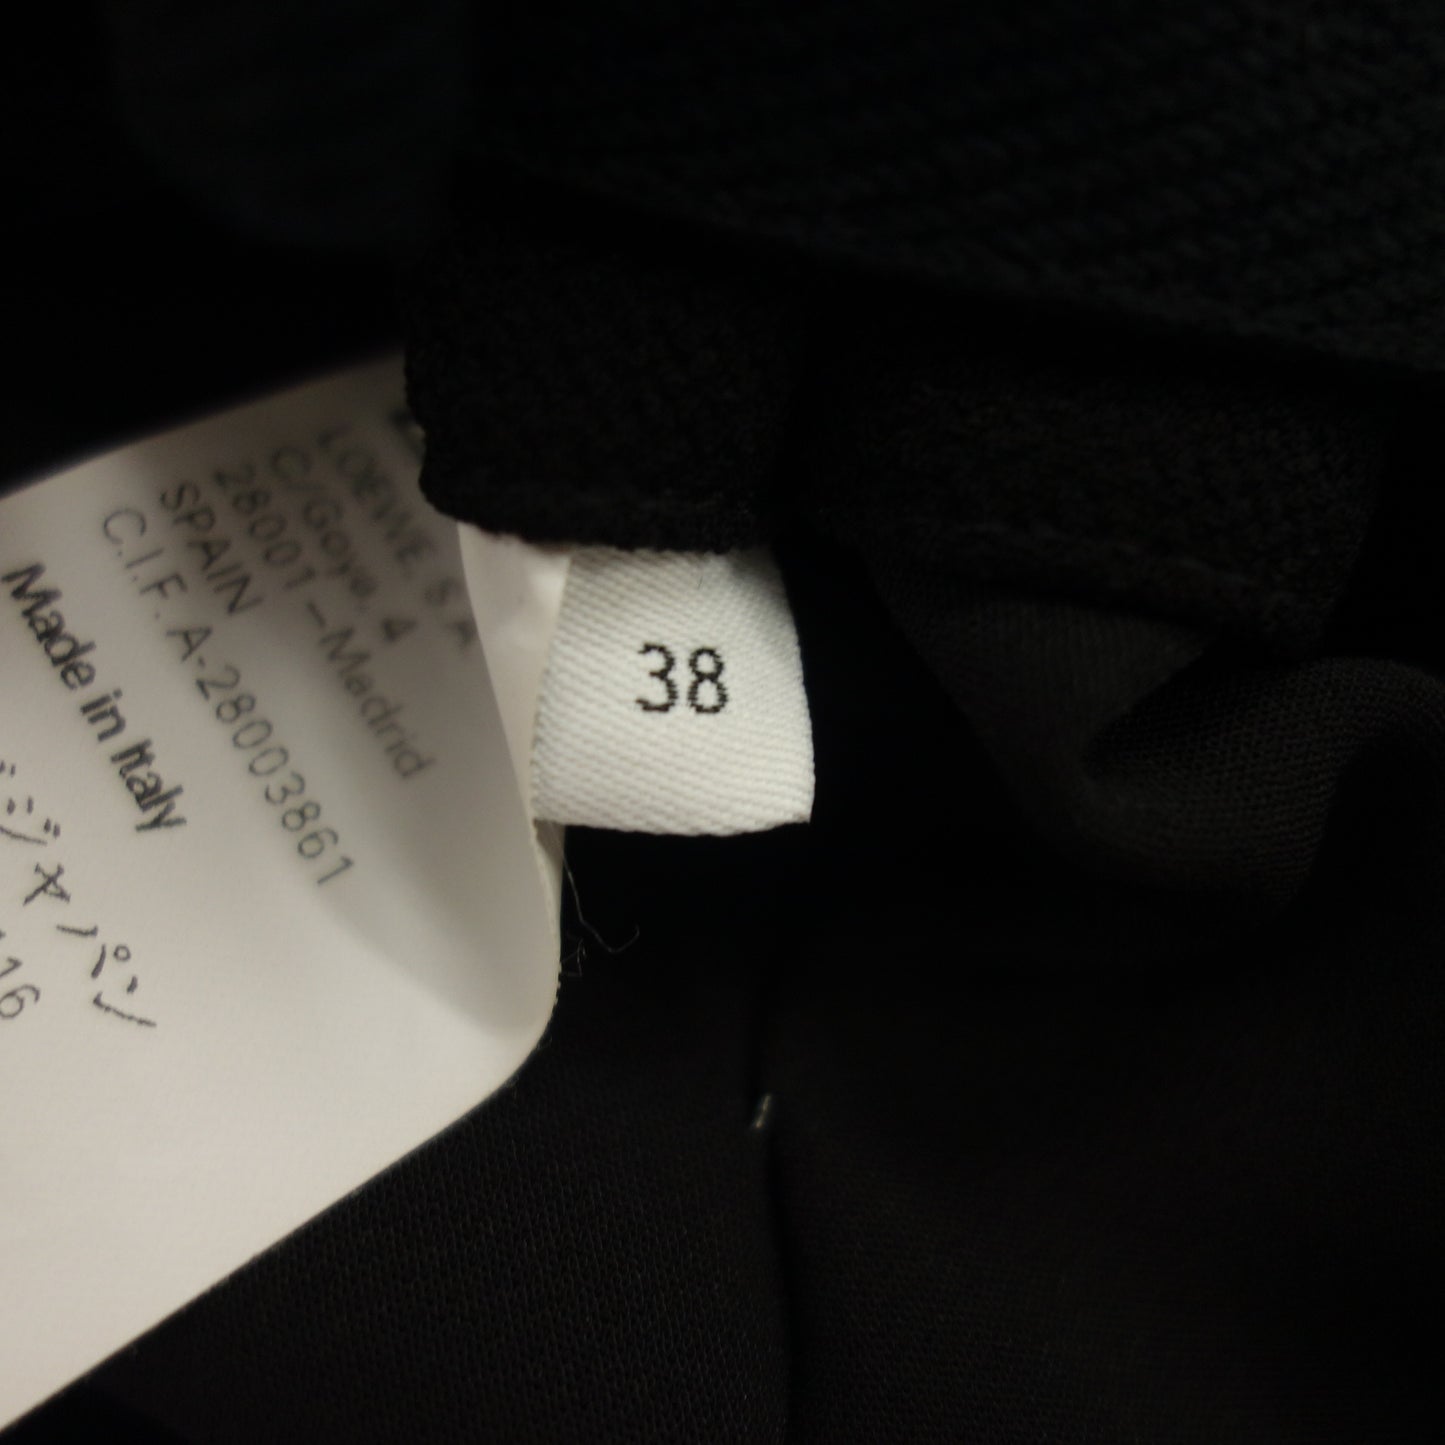 Used LOEWE Skirt Polyester Black Size 38 Women's LOEWE [AFB28] 